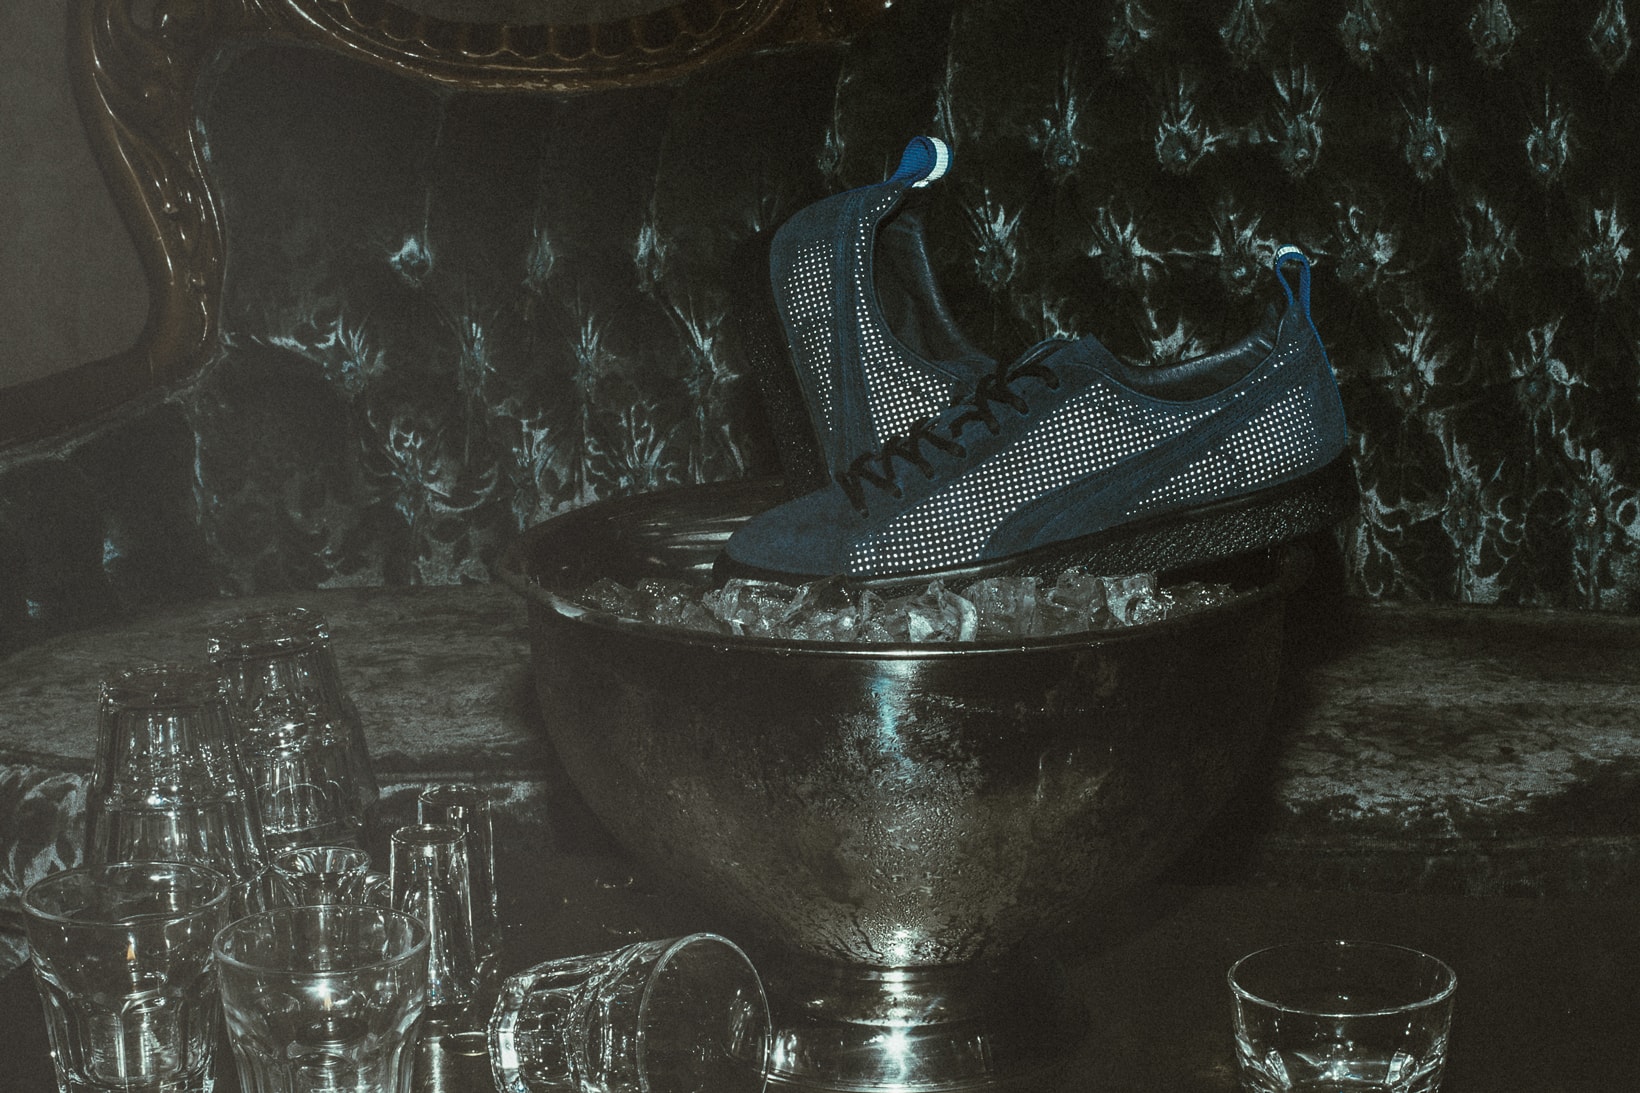 Off The Hook PUMA Clyde Dress Code Footwear Sneaker Shoe Release Date Info October 14 21